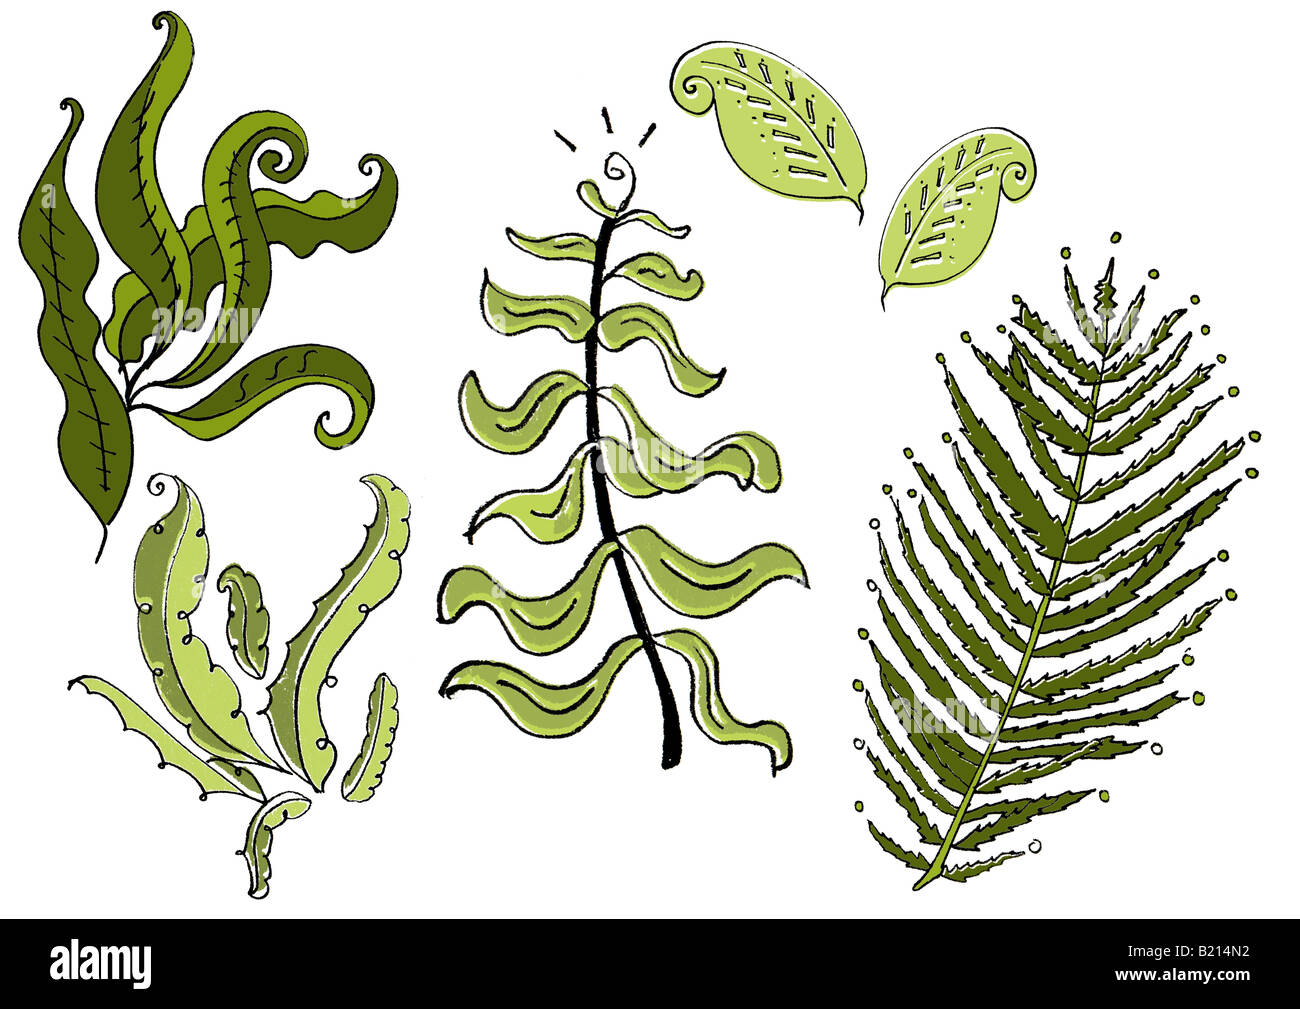 Graphic Illustration of ferns Stock Photo